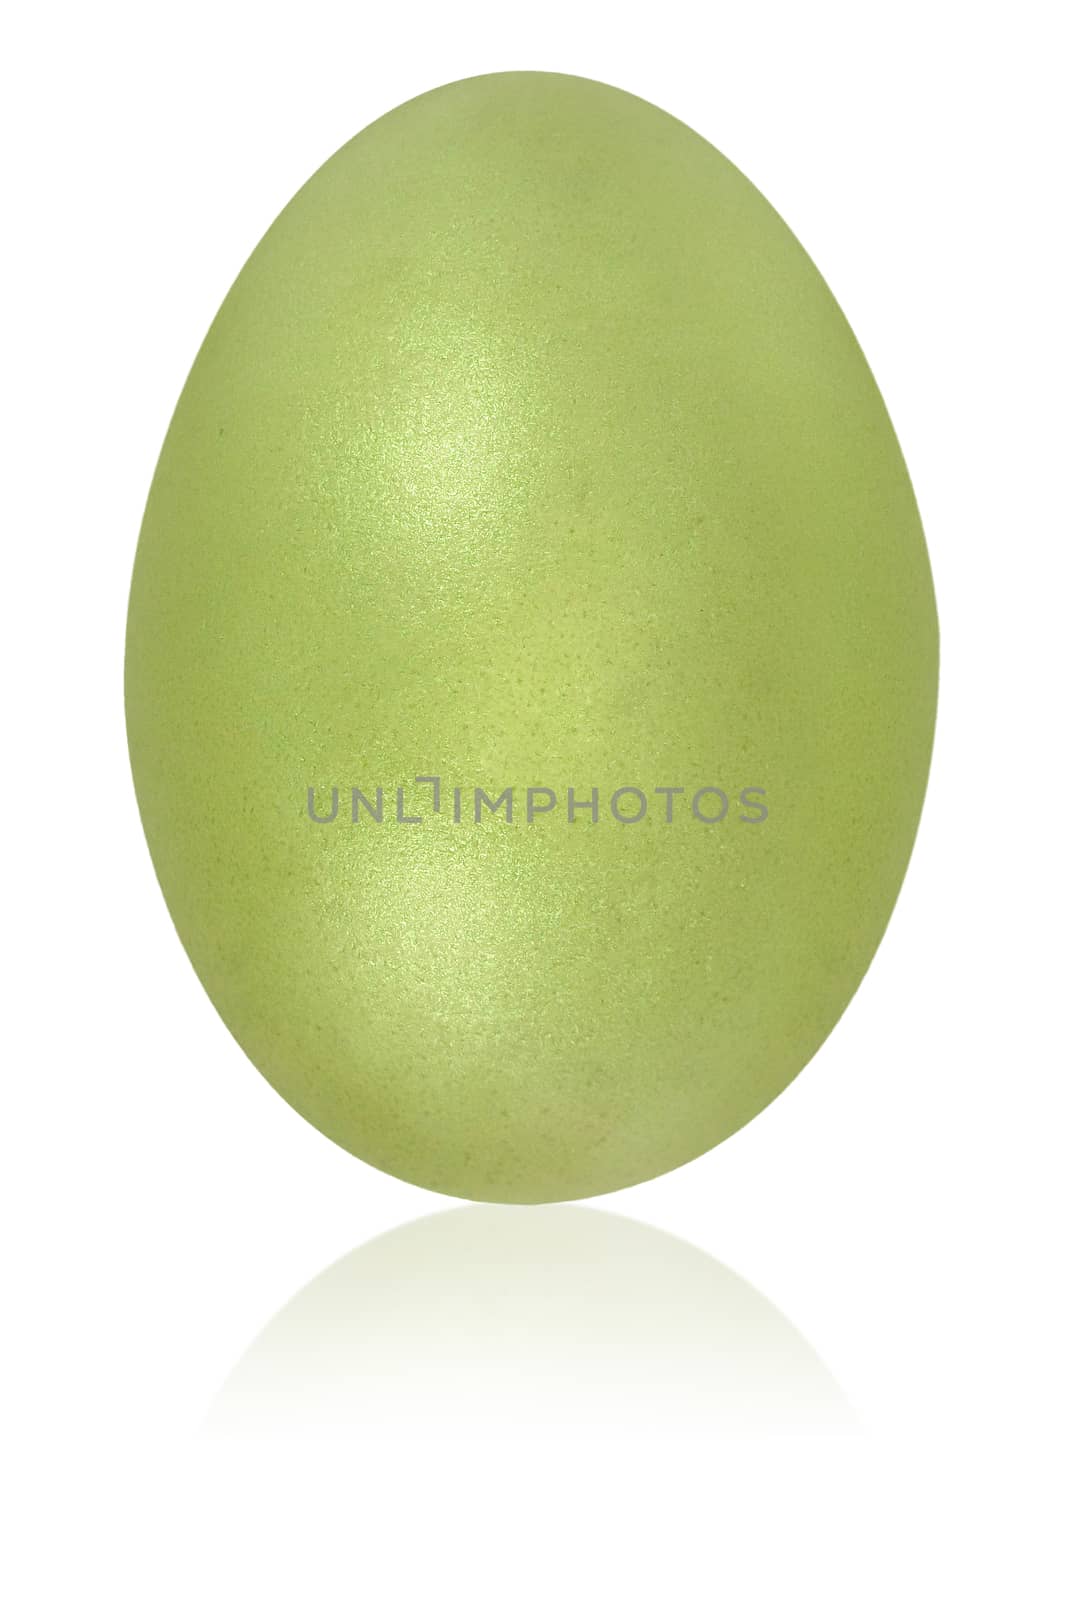 dark tea green egg isolated background